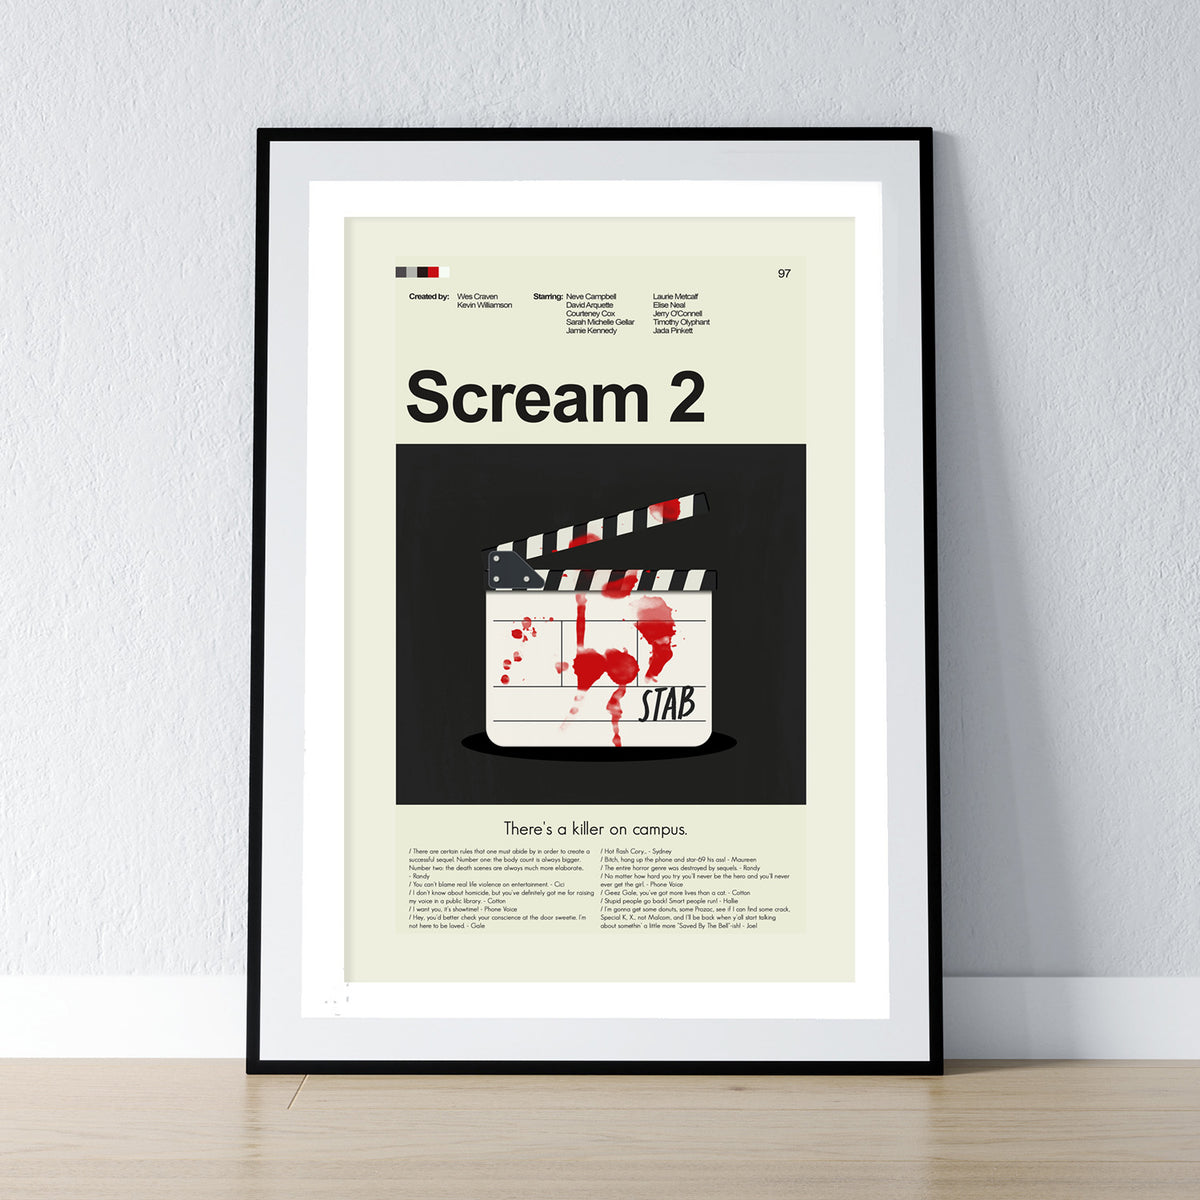 Scream 2 - Stab Movie Slate | 12"x18" or 18"x24" only | PrintsandgiggIes